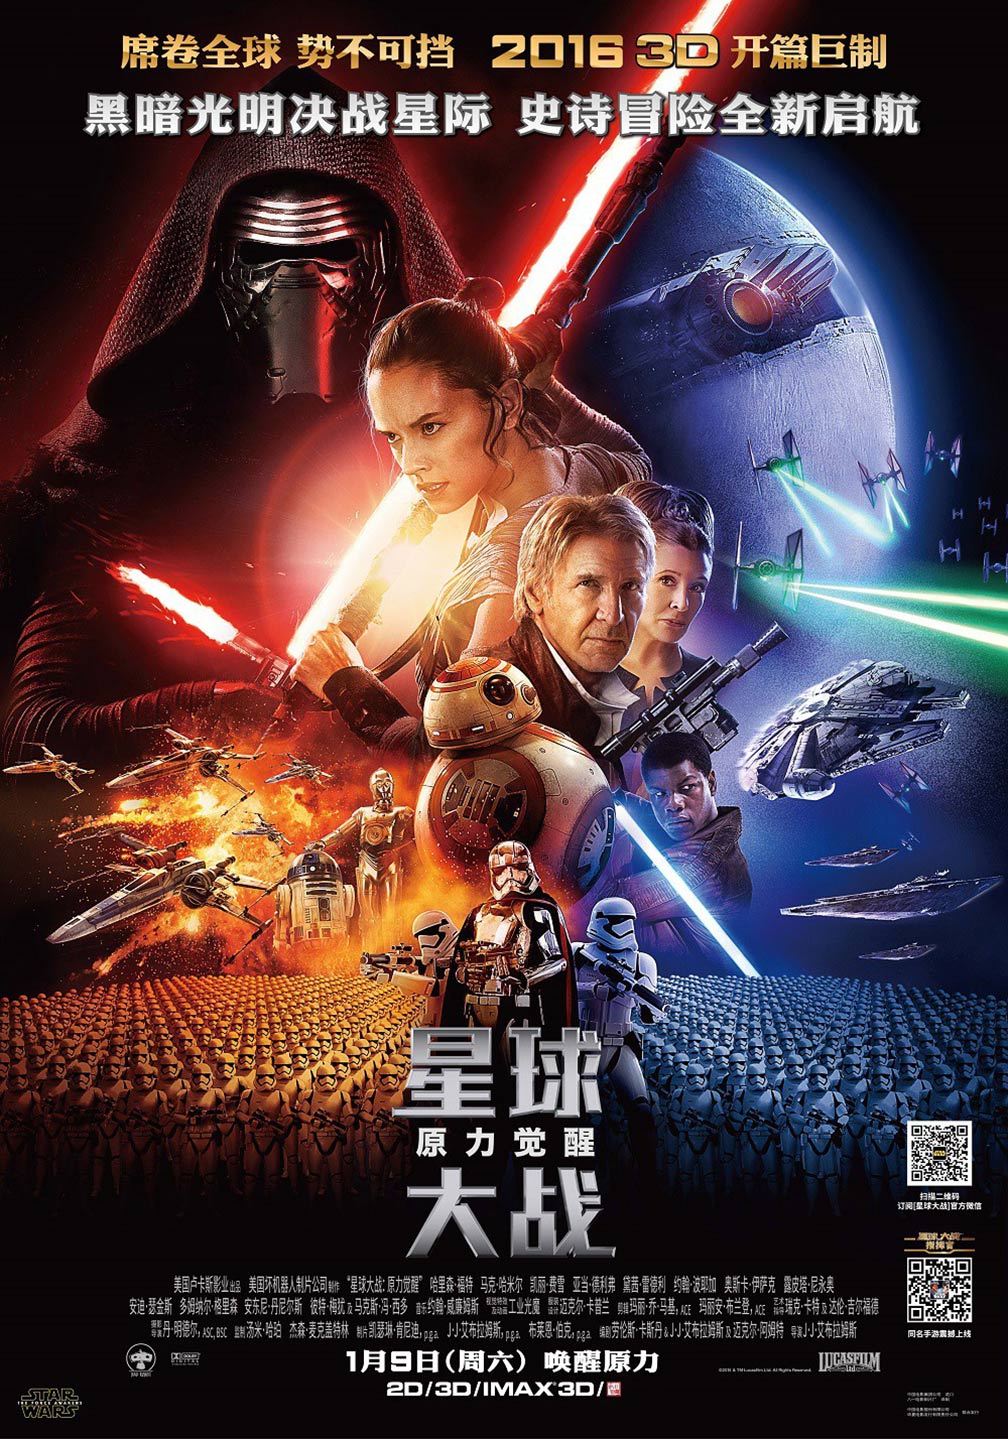 Star Wars Episode VII: The Force Awakens HD wallpapers, Desktop wallpaper - most viewed